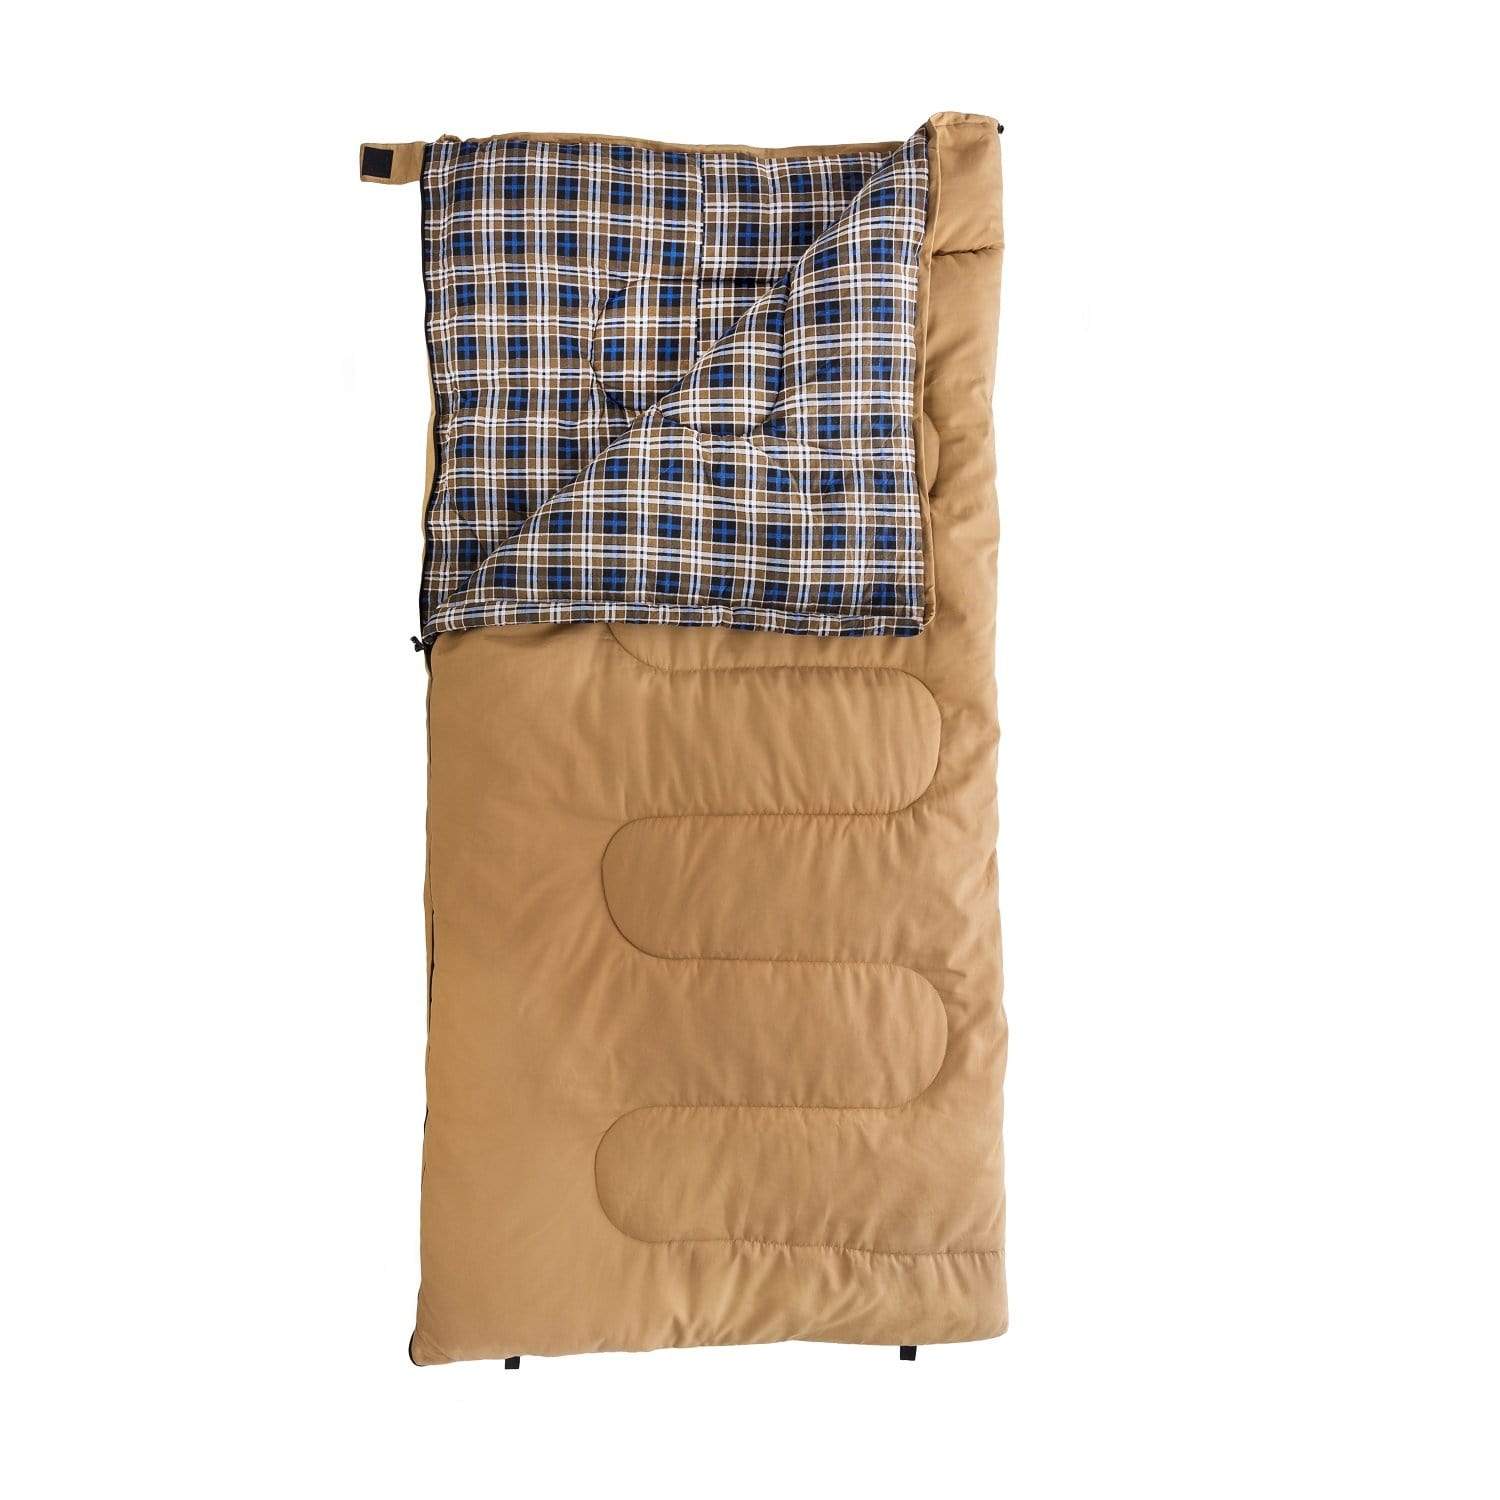 Kamp-Rite Camping & Outdoor : Sleeping Bags & Cots Kamp-Rite Woods Ultra - 15 Degree Sleeping Bag